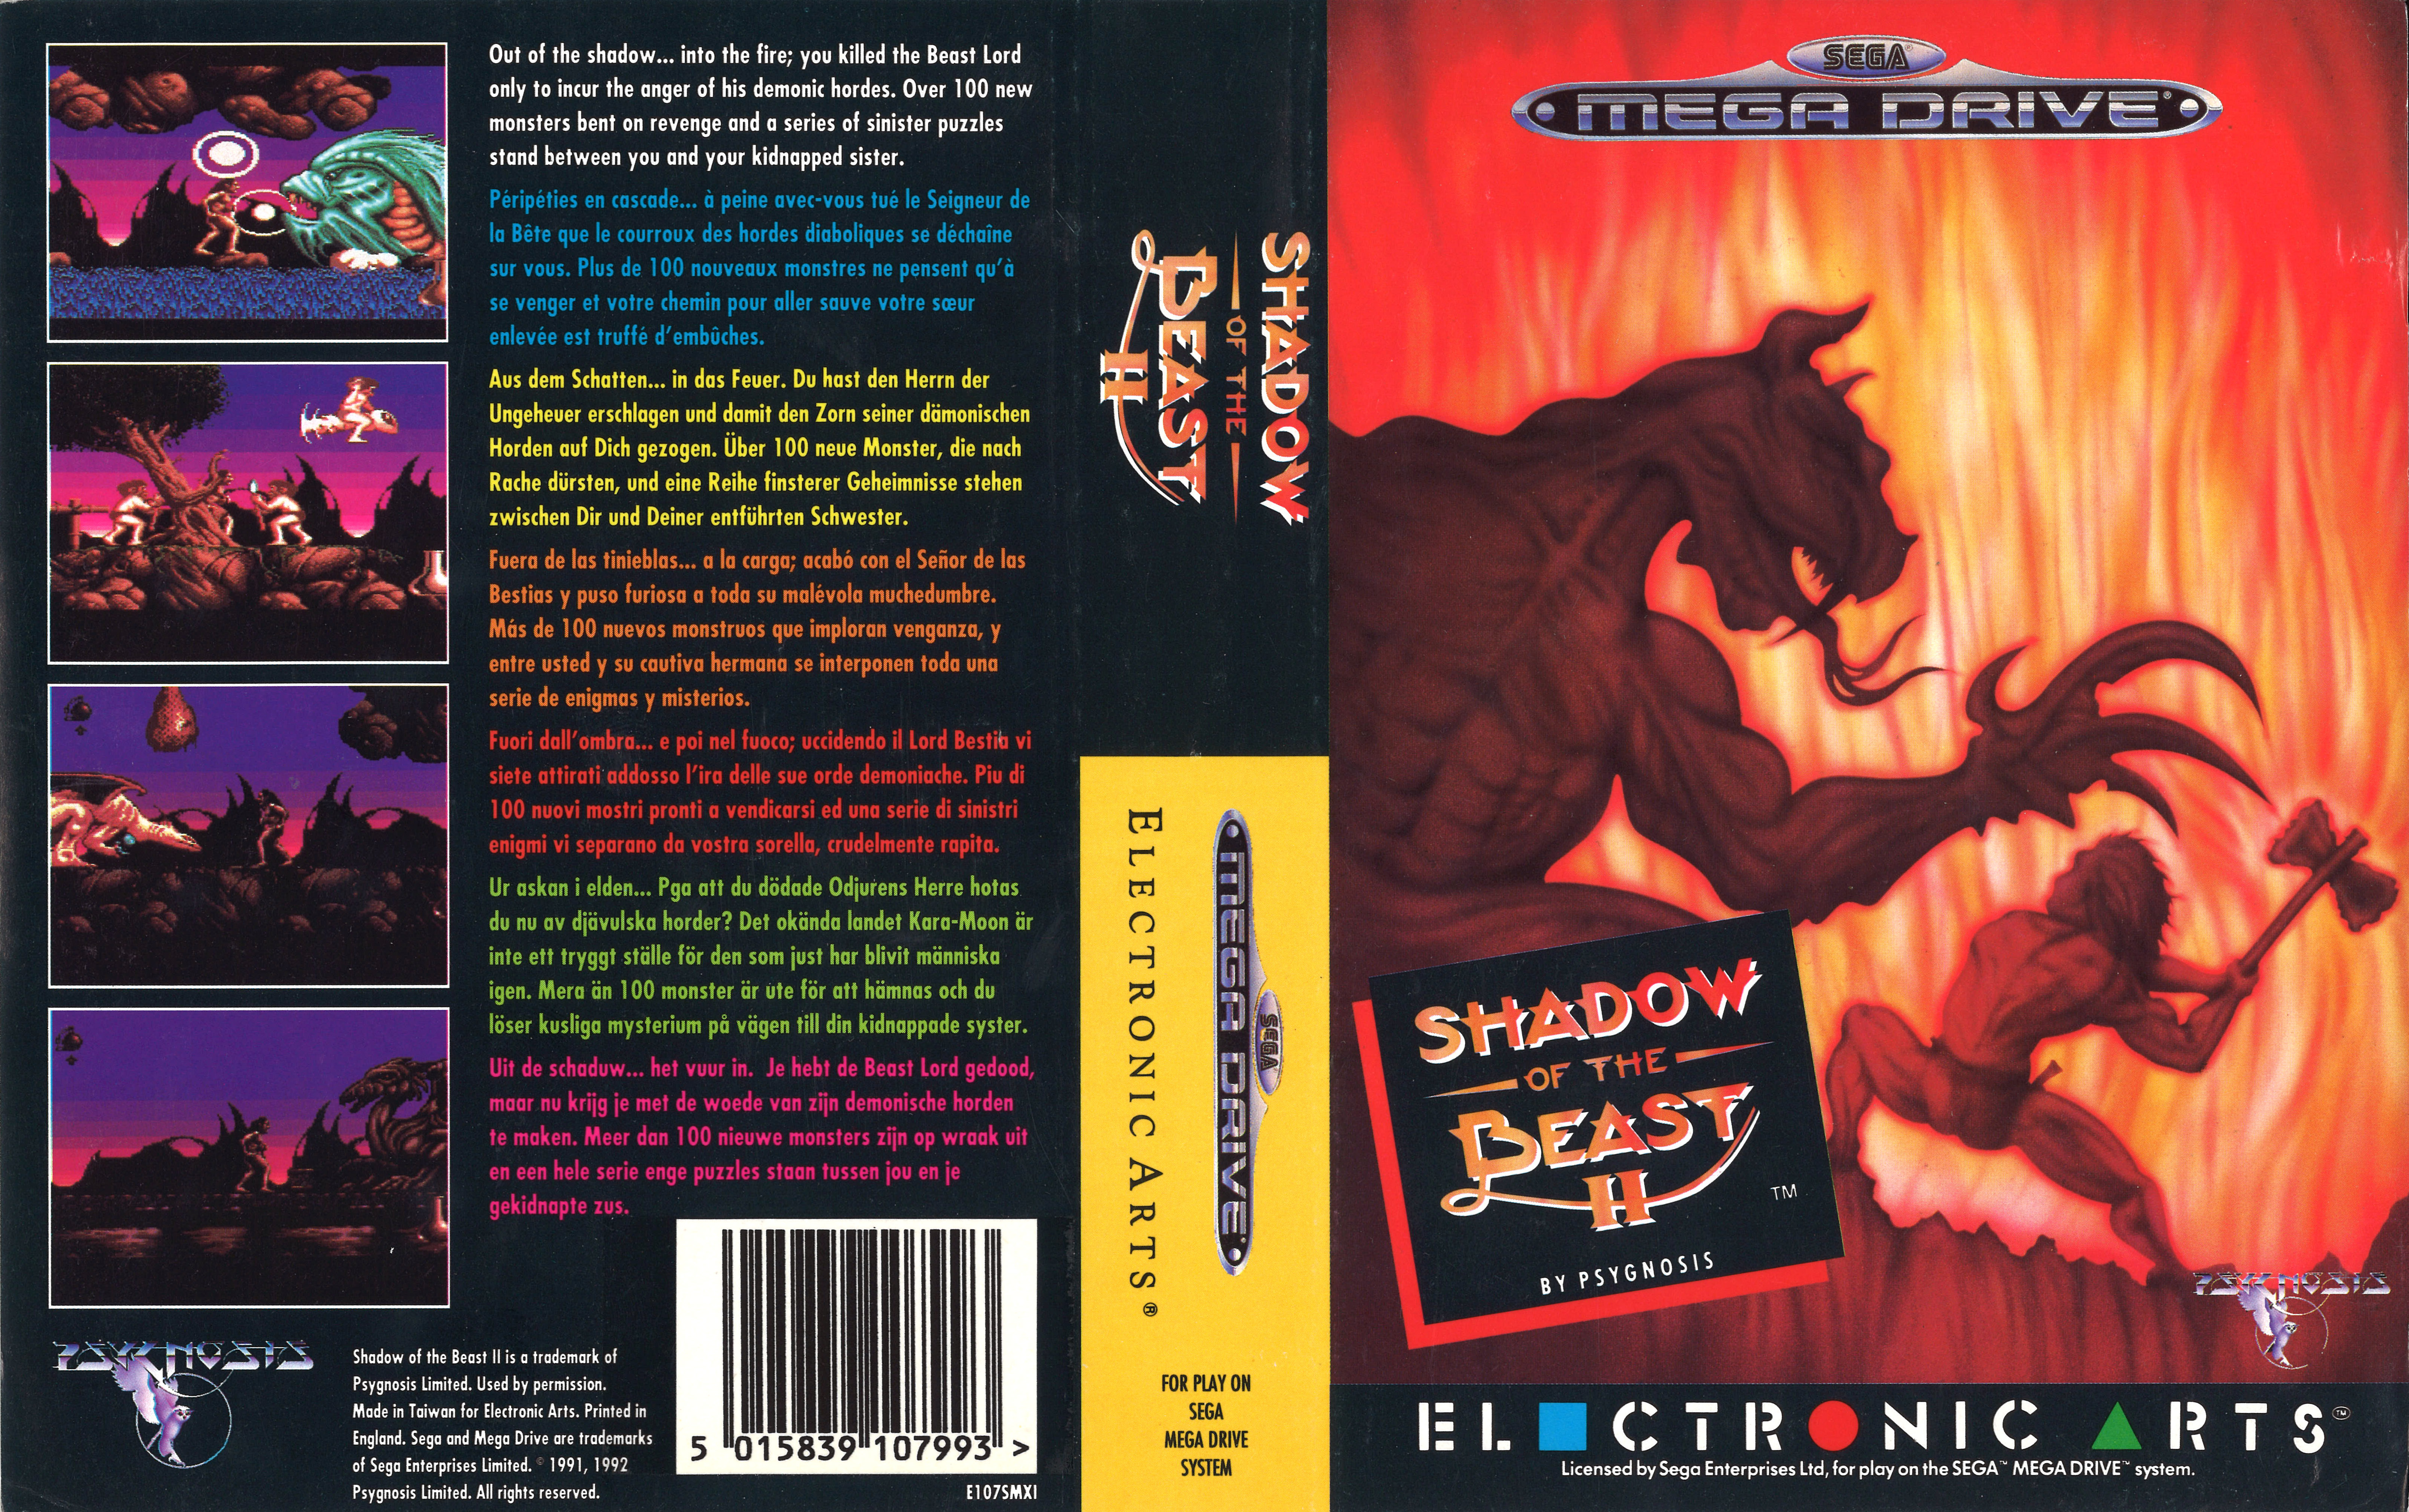 jaquette du jeu vidéo Shadow of the Beast II